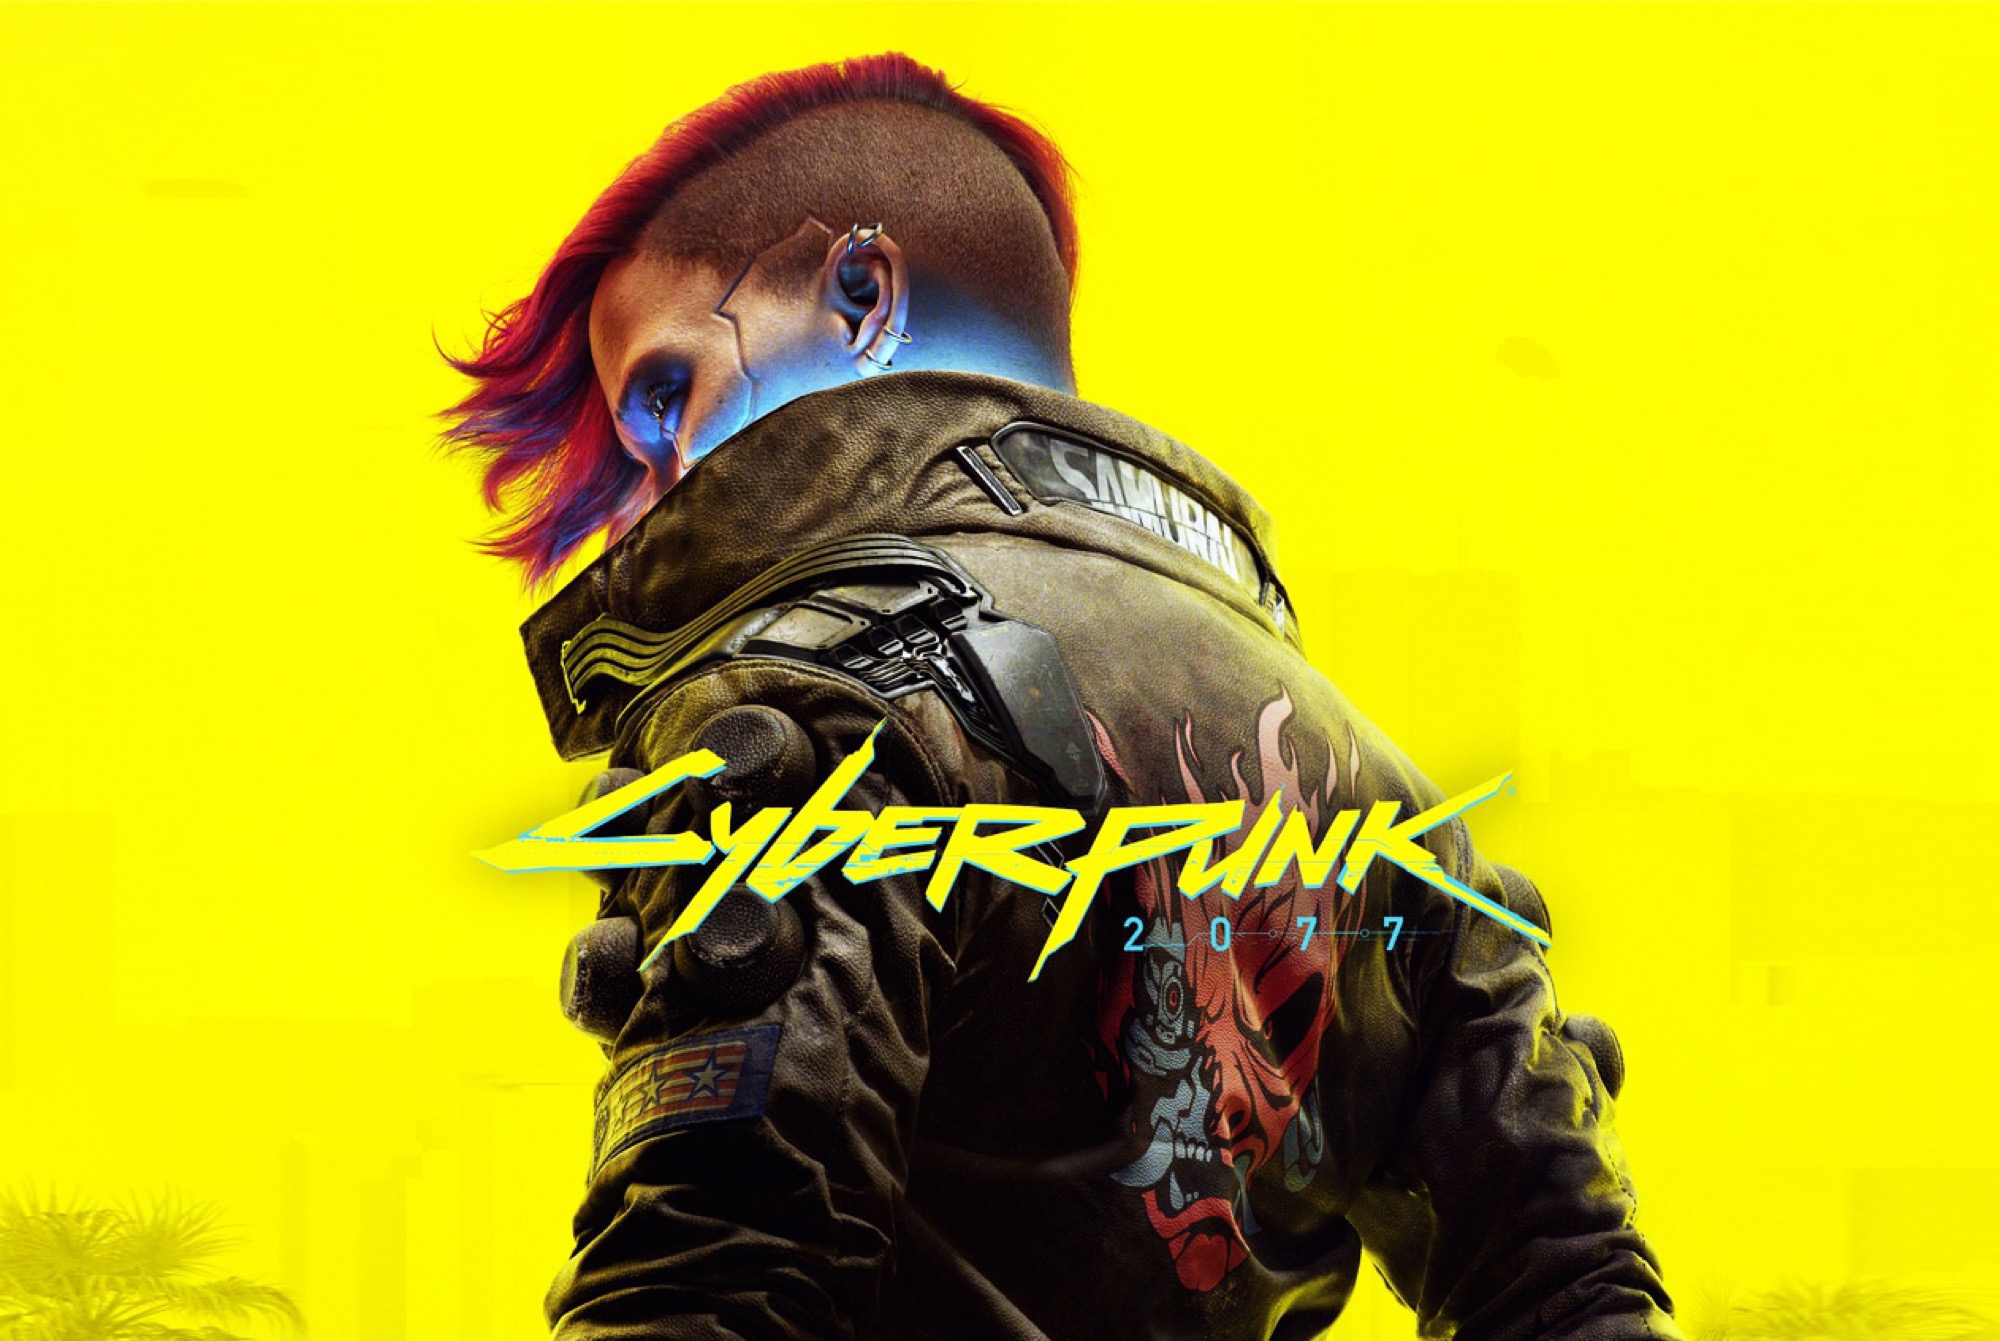 Cyberpunk 2077 covers